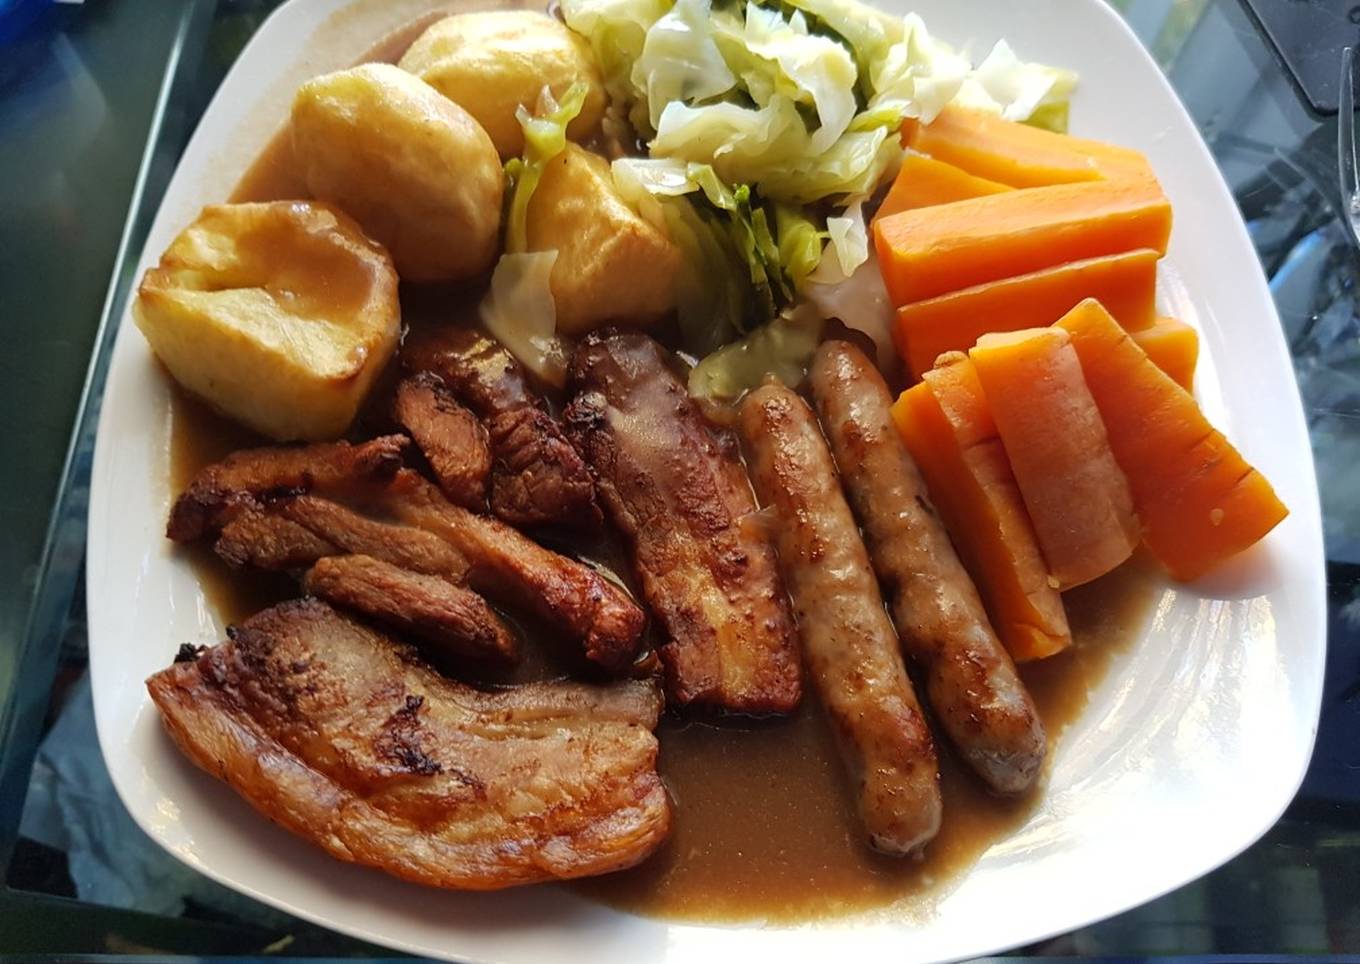 belly pork and pork sausage roast